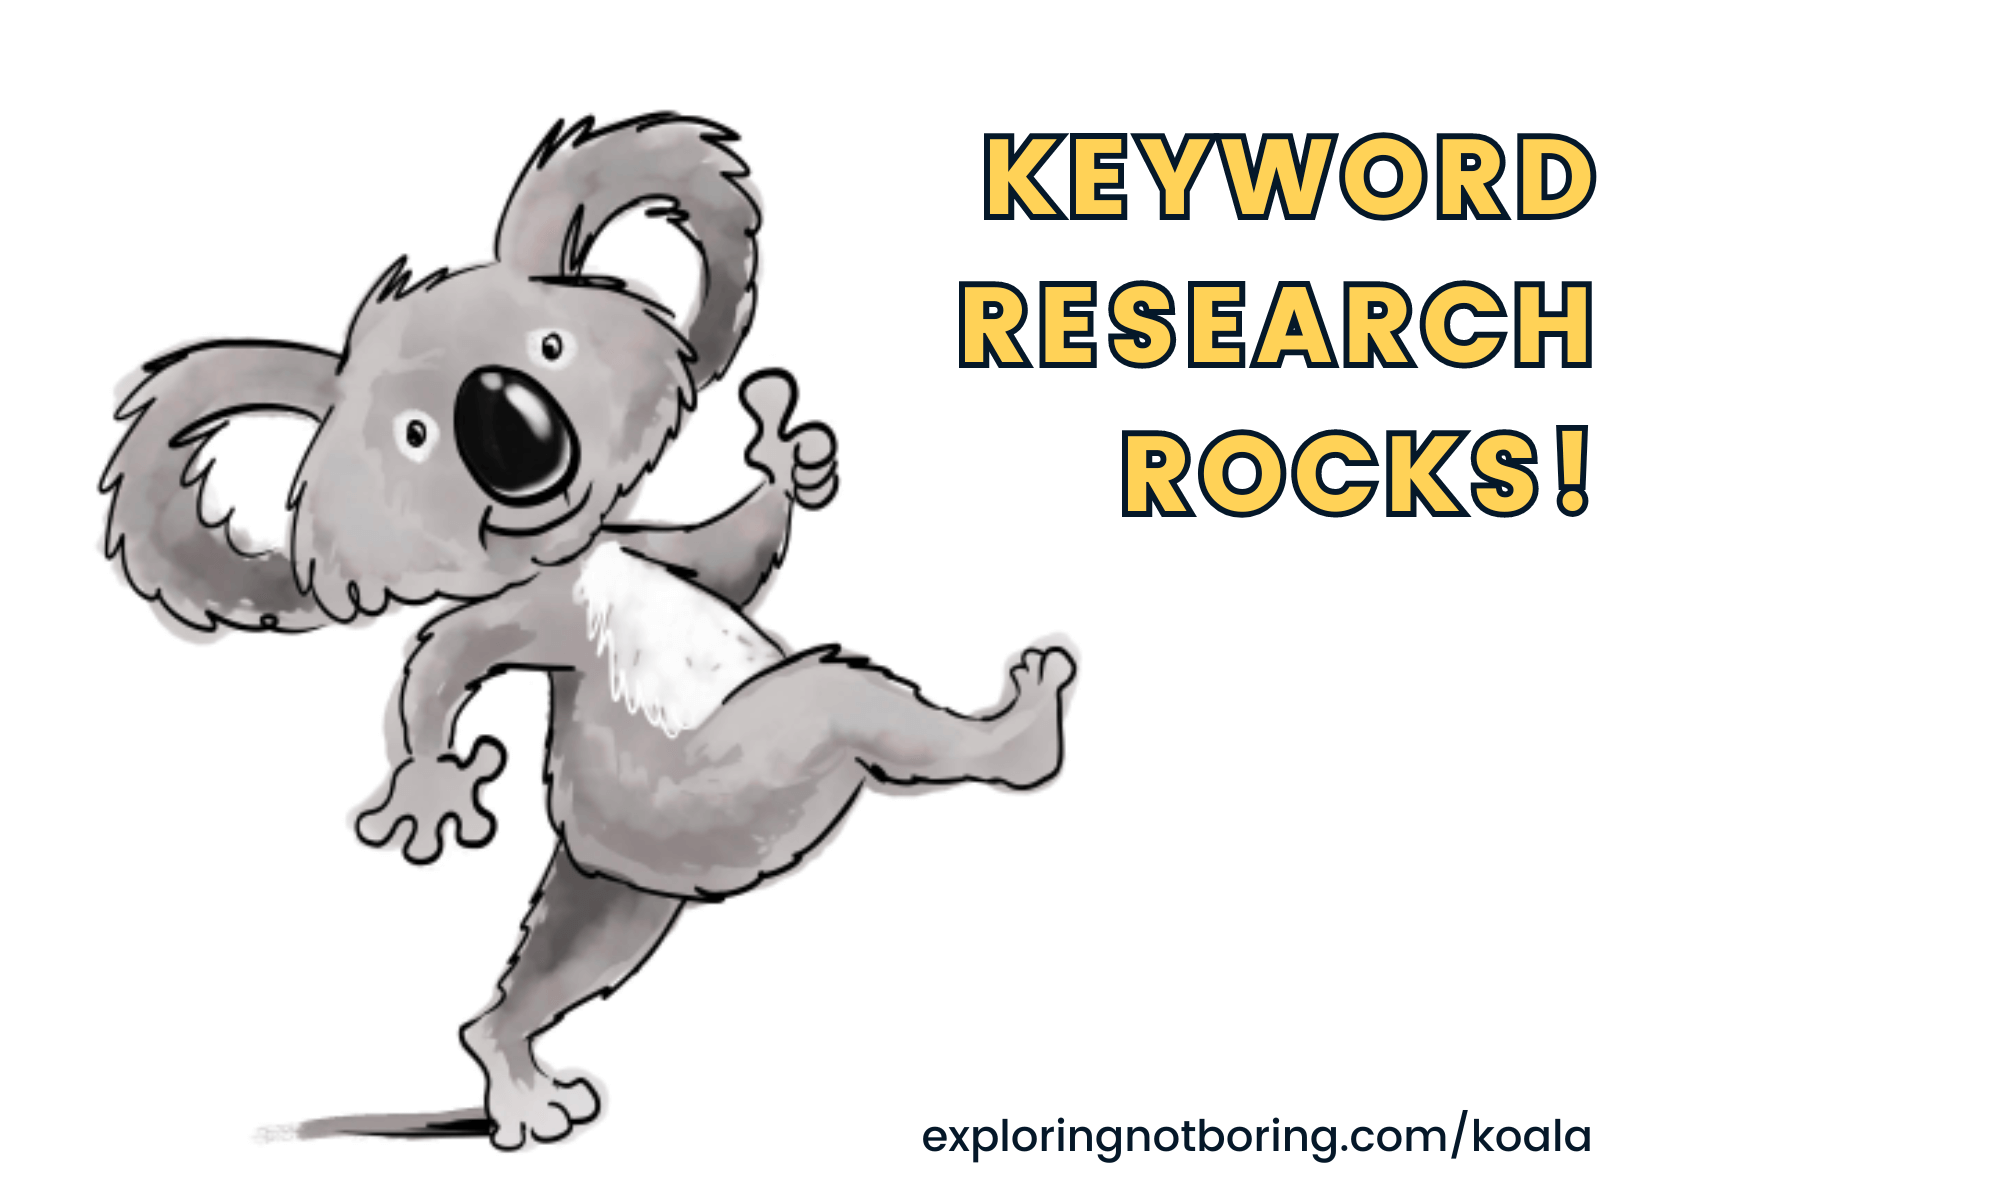 Google Keyword Research_Meet and Draw A Koala on exploringnotboring.com